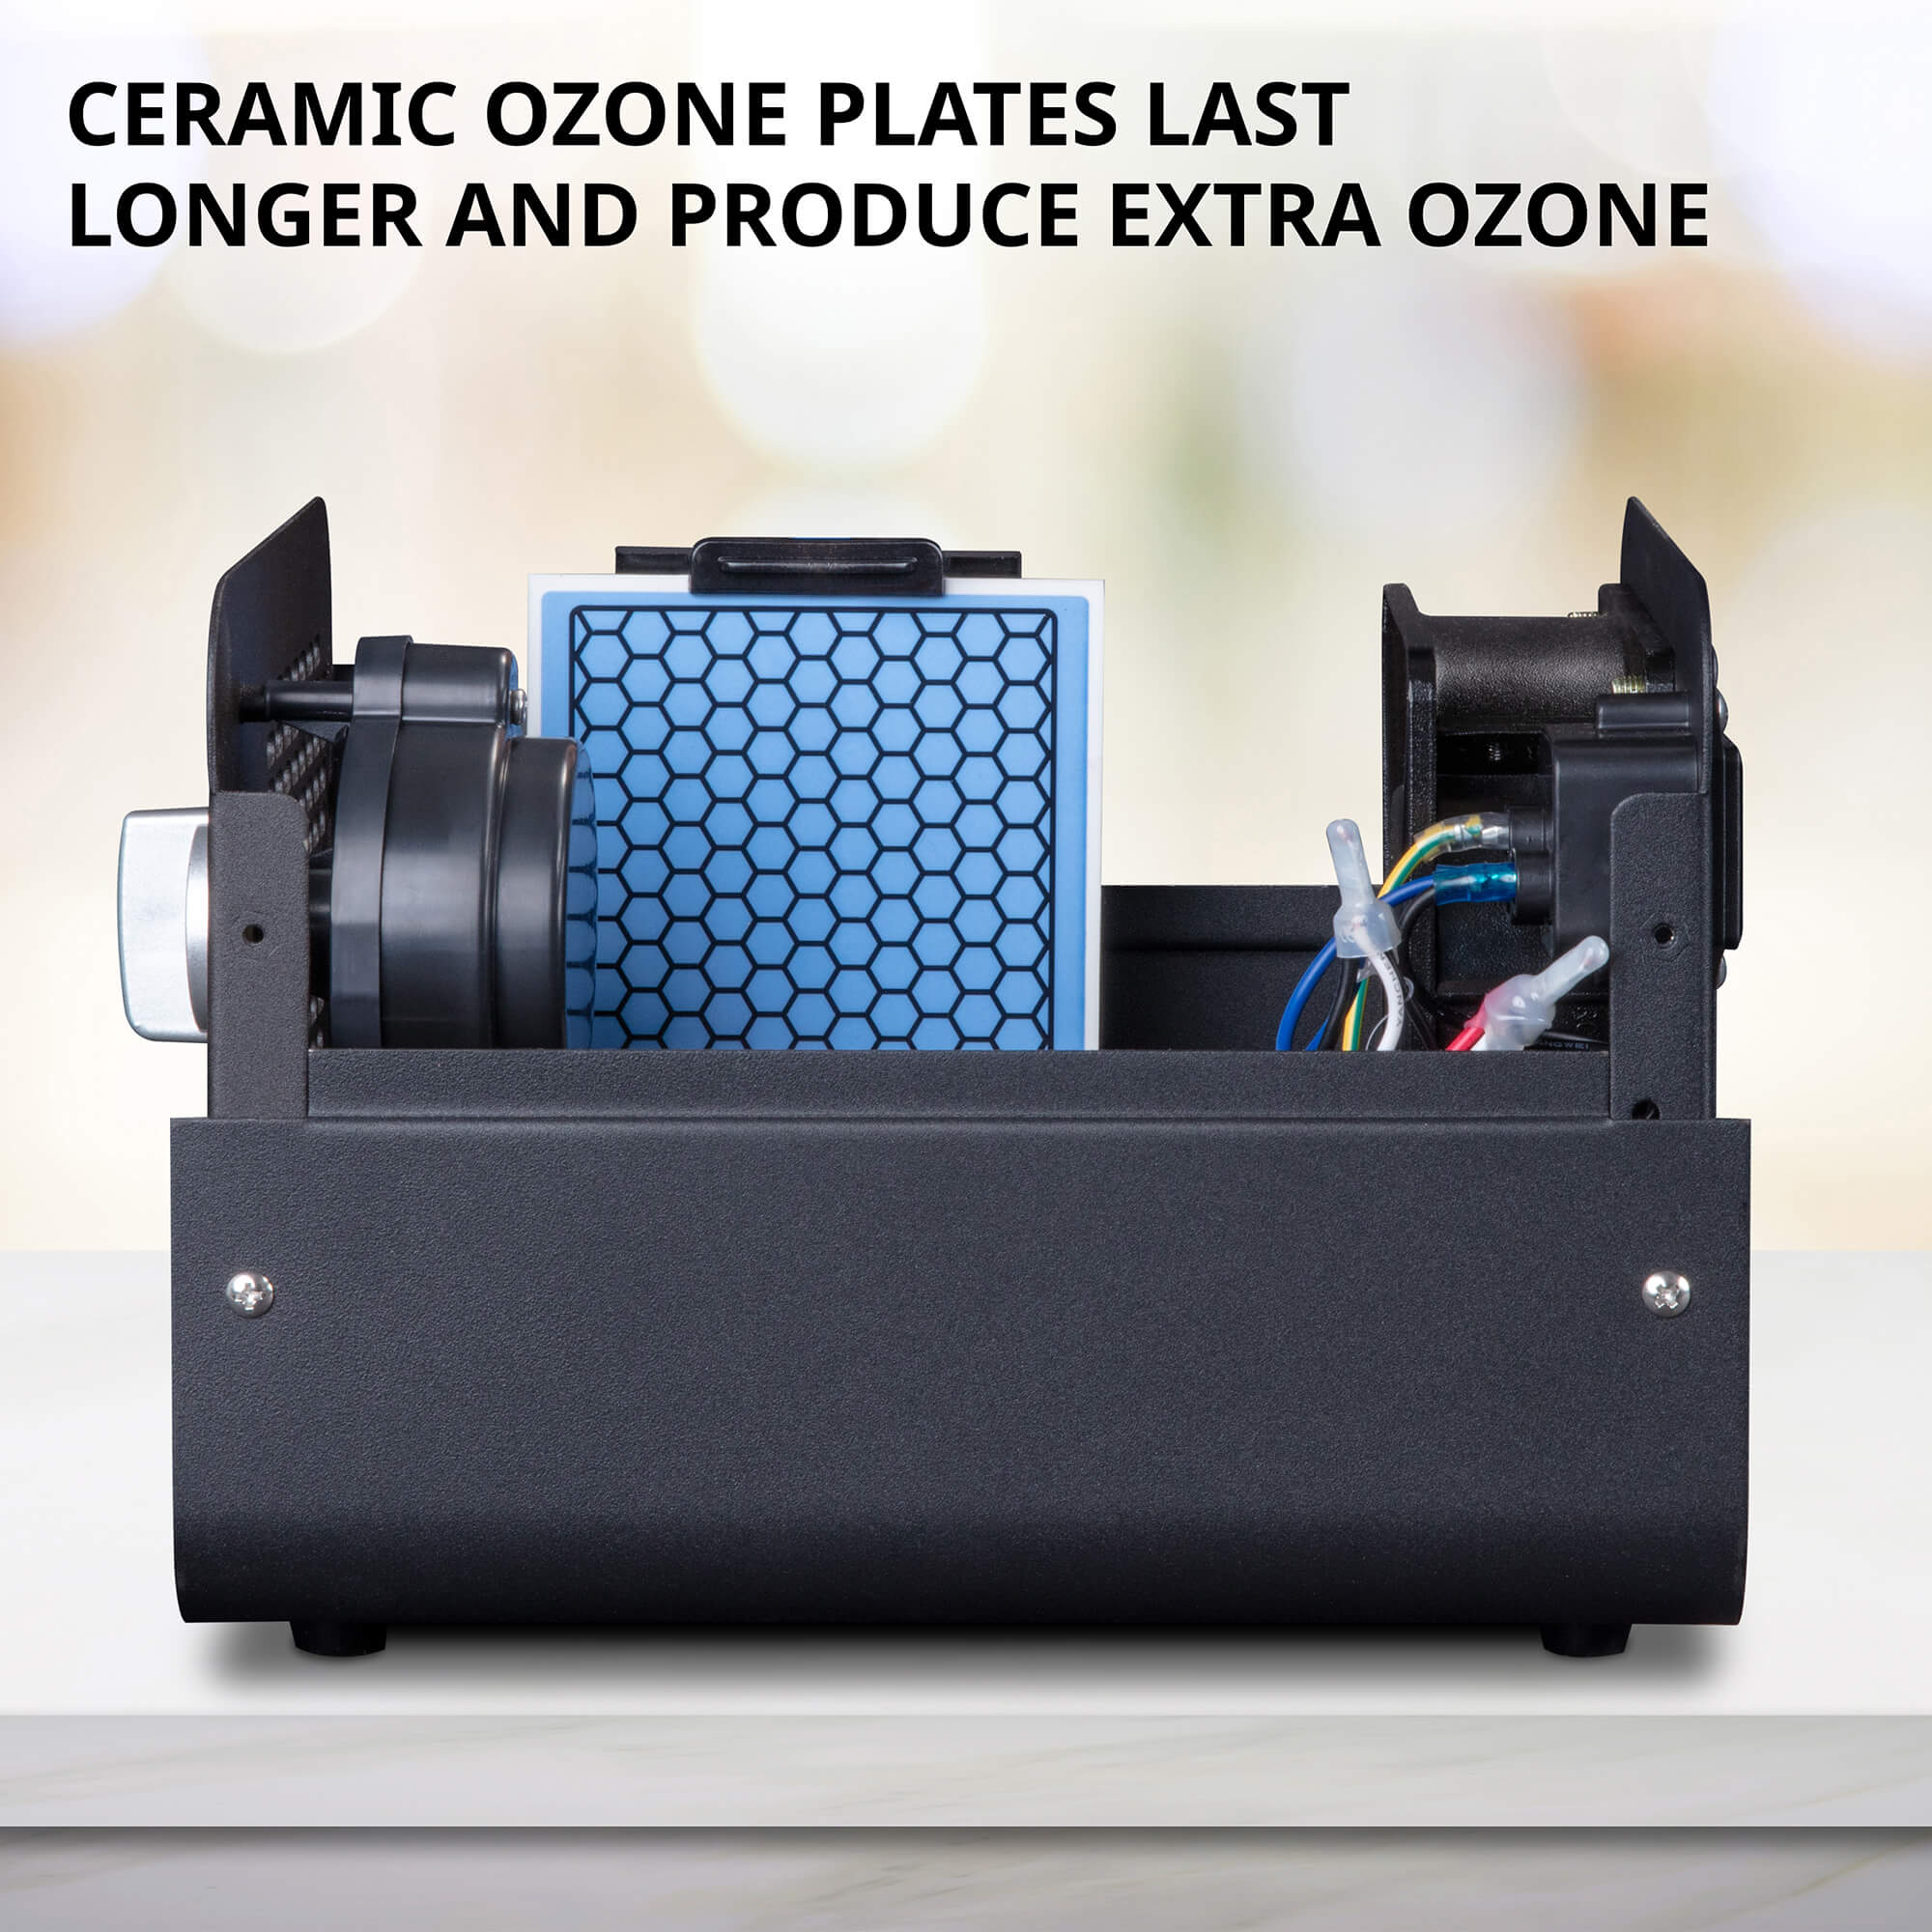 Générateur d'Ozone Digital 10 000 mg/h + Appli WIFI - Oxytrading